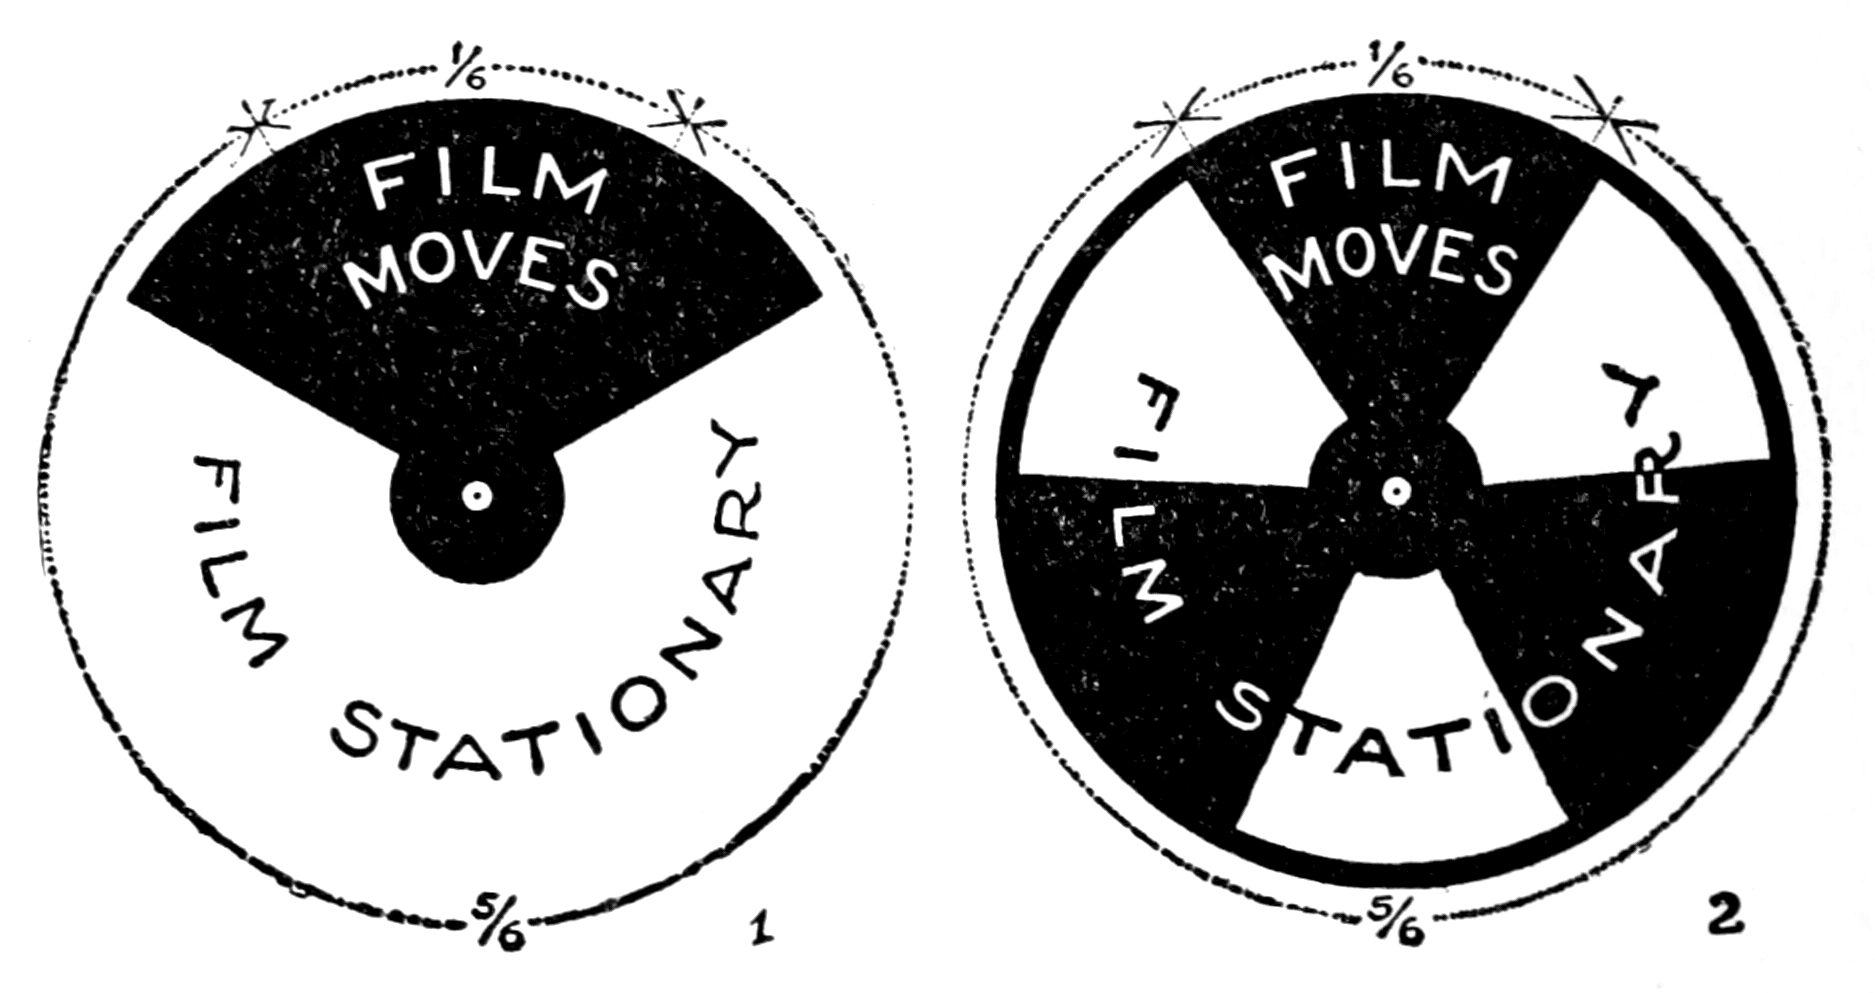 Film Moves; Film Stationary